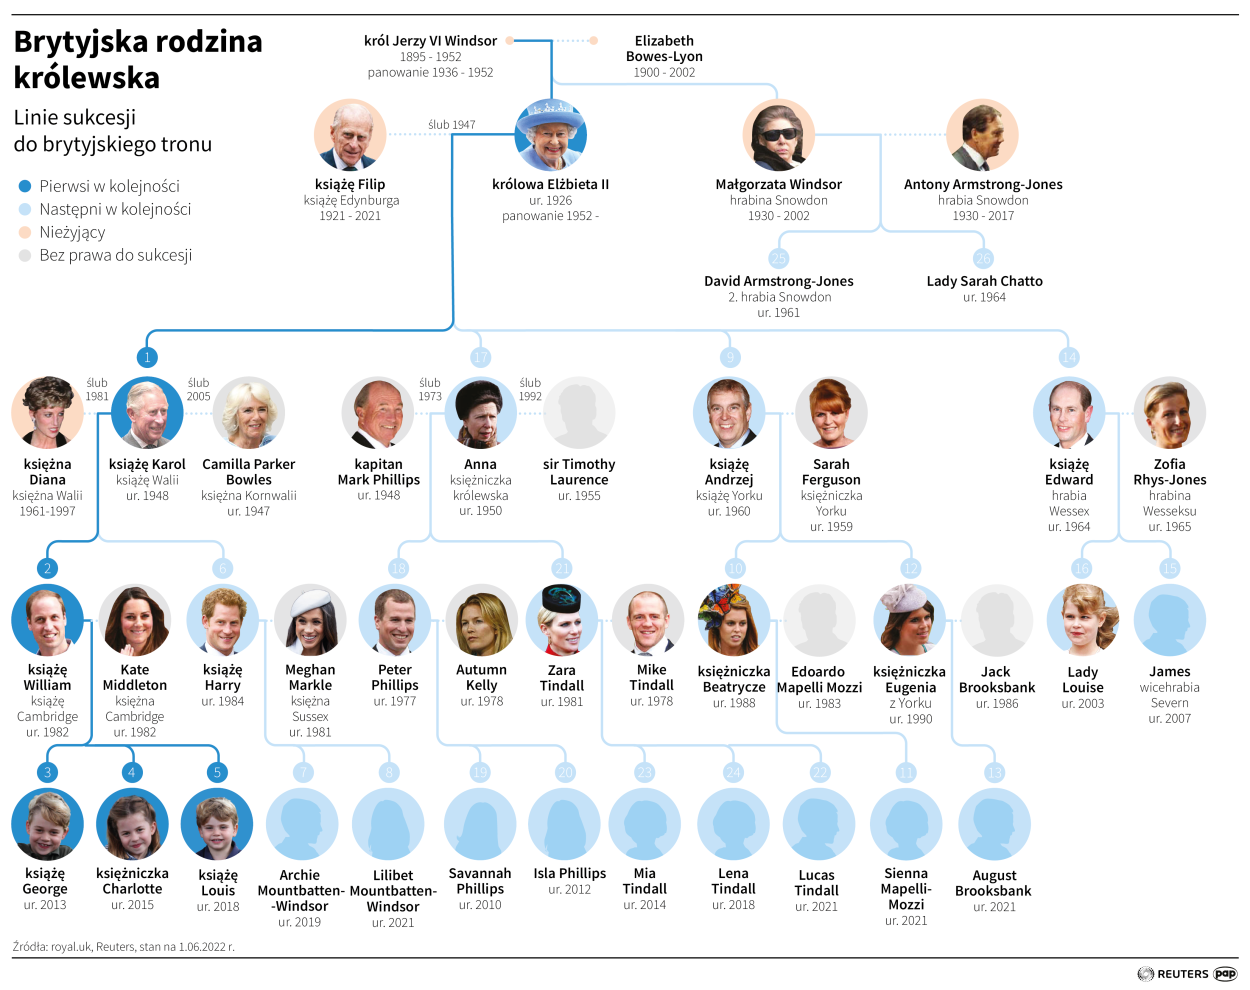 Brytyjska rodzina królewska, PAP/REUTERS/ Maria Samczuk